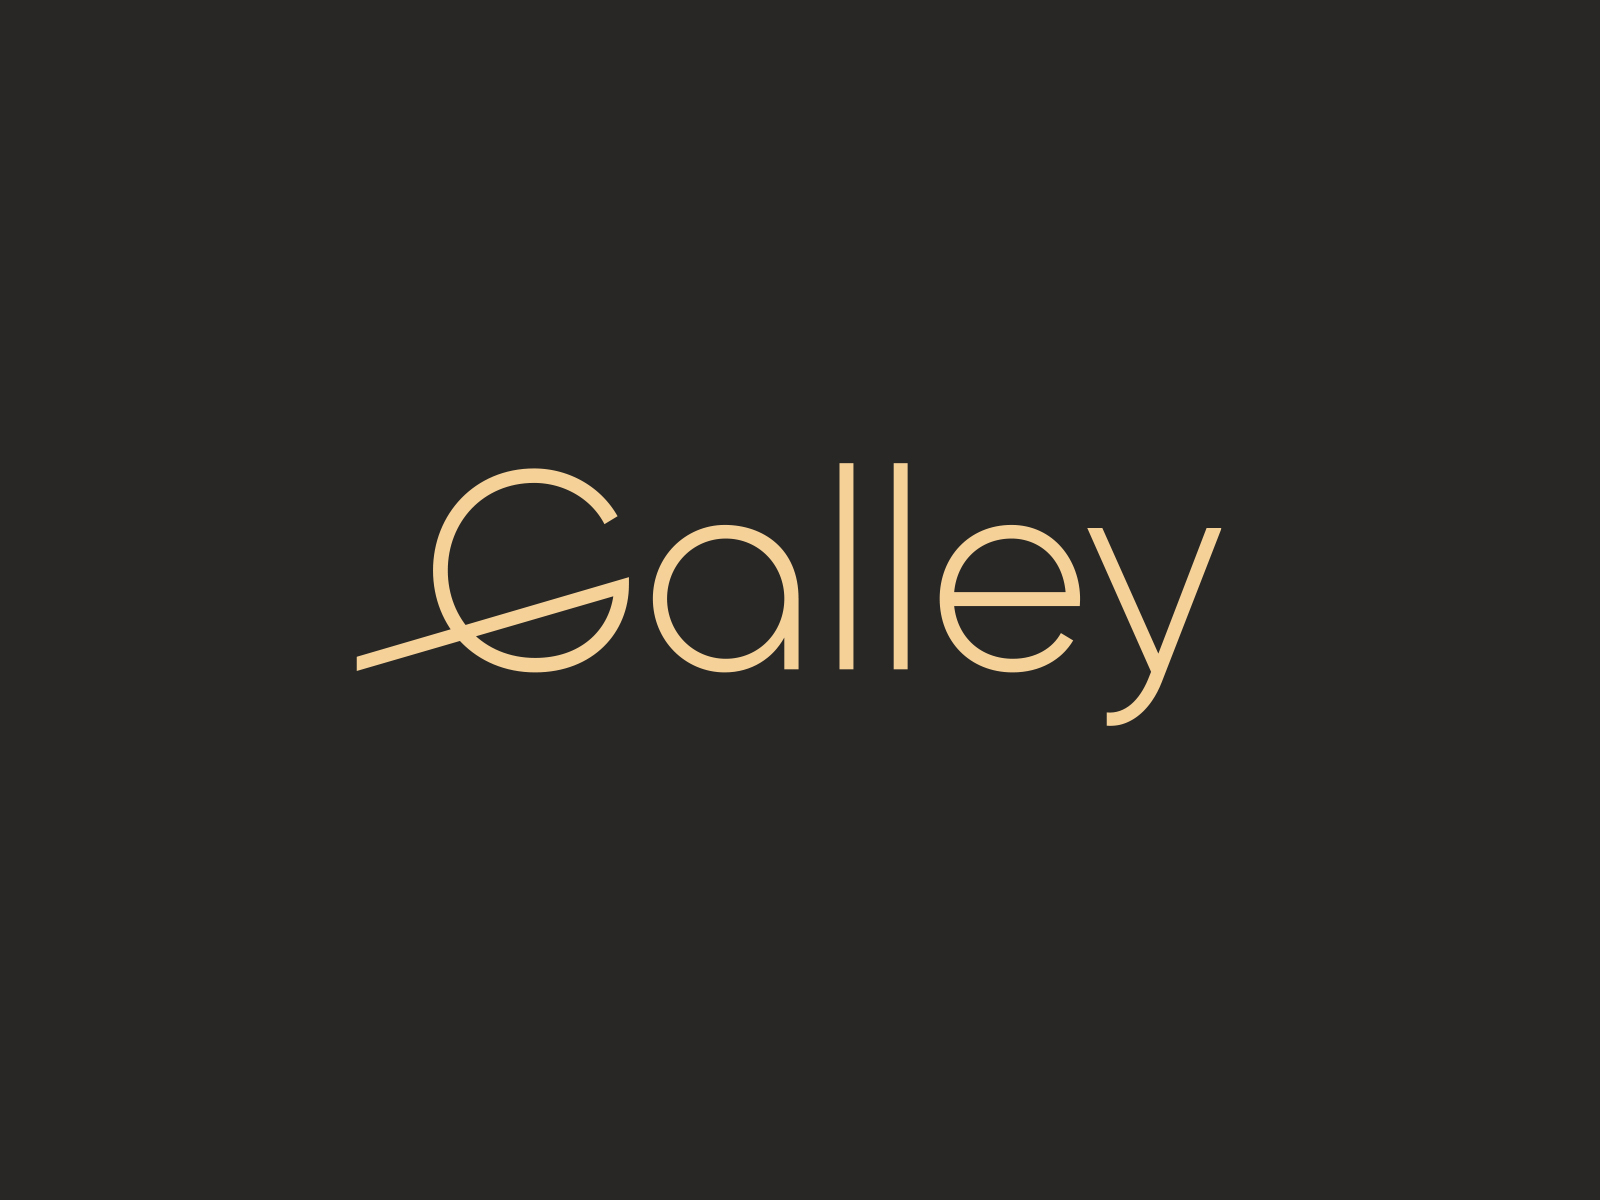 Galley by Vlad Smolkin on Dribbble